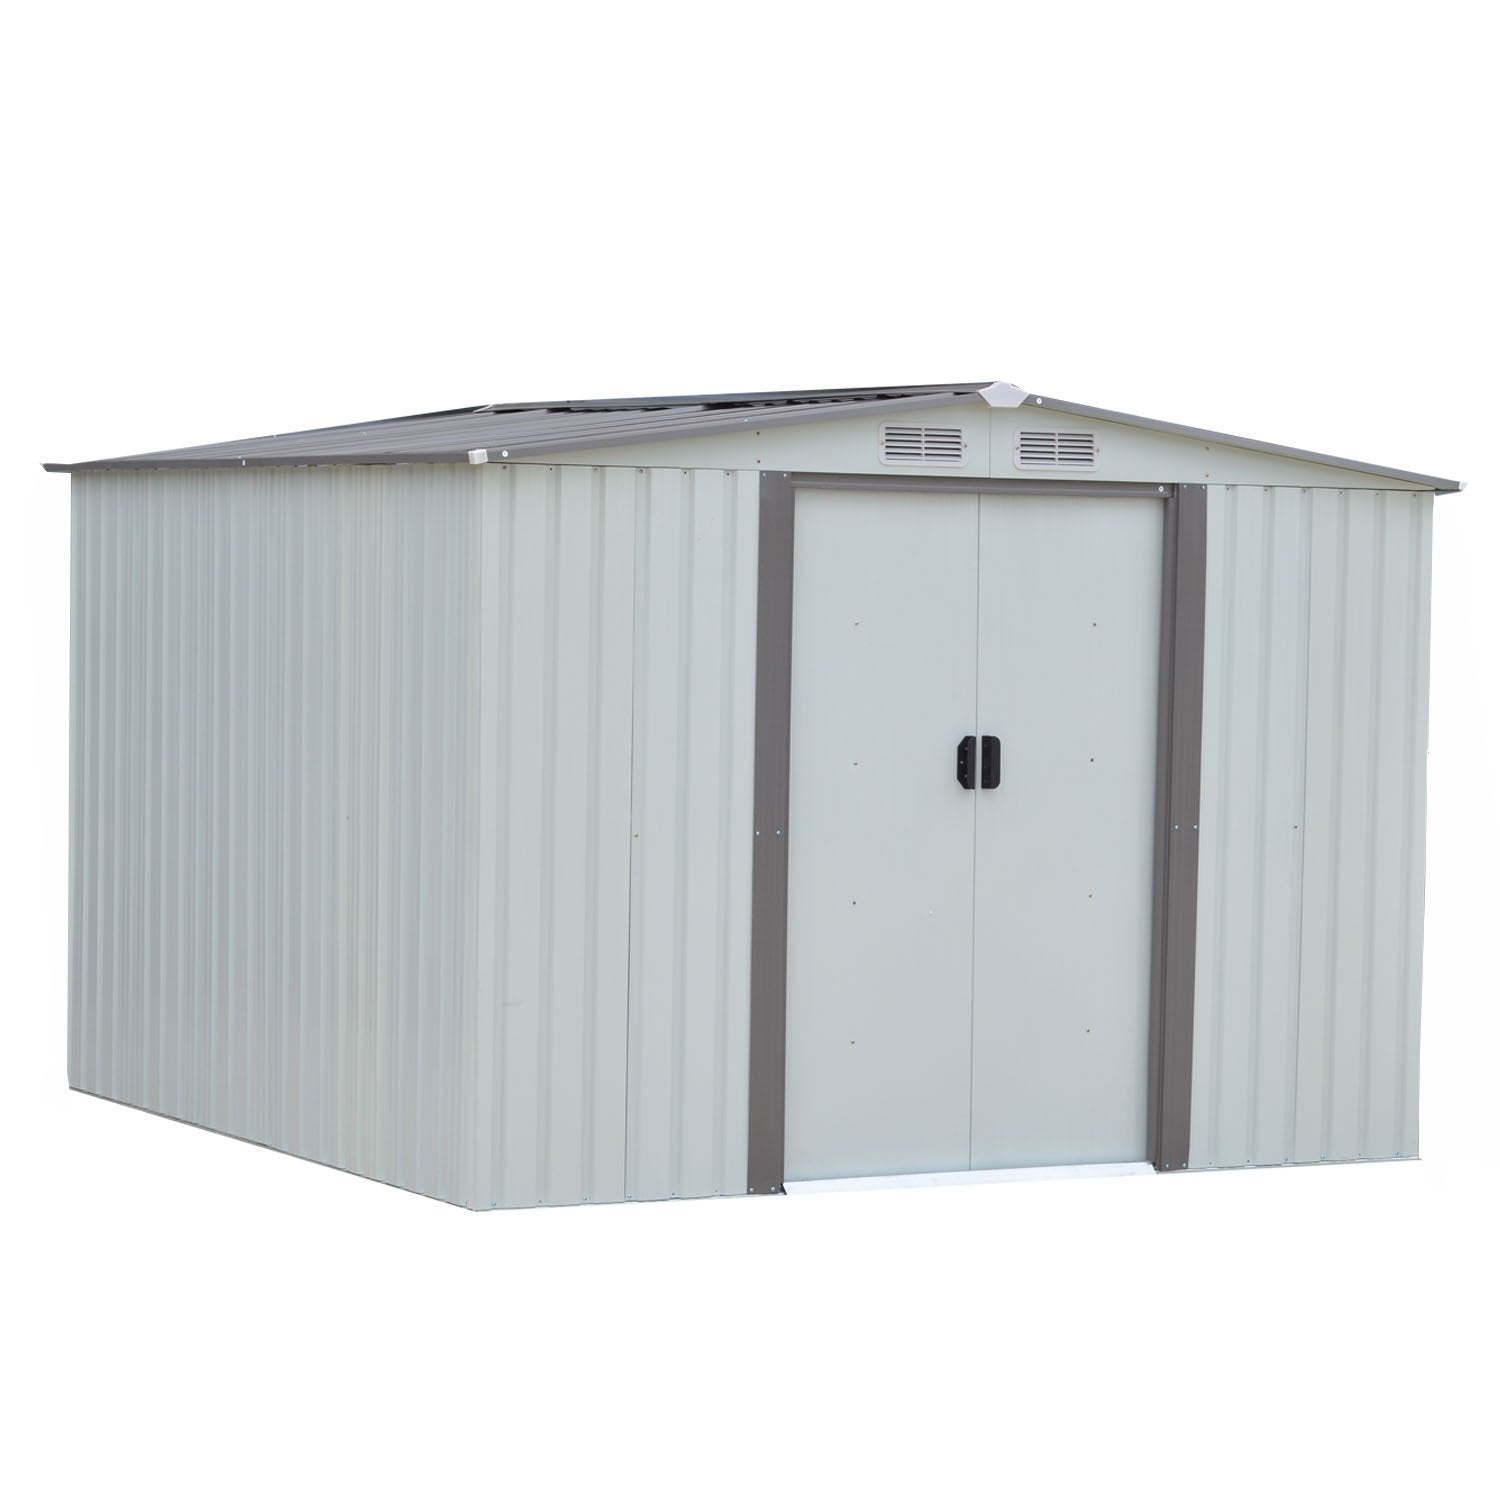 Discover the wonlink heavy duty outdoor steel garden storage utility shed backyard lawn building garage white warm gray 8 by 8 feet